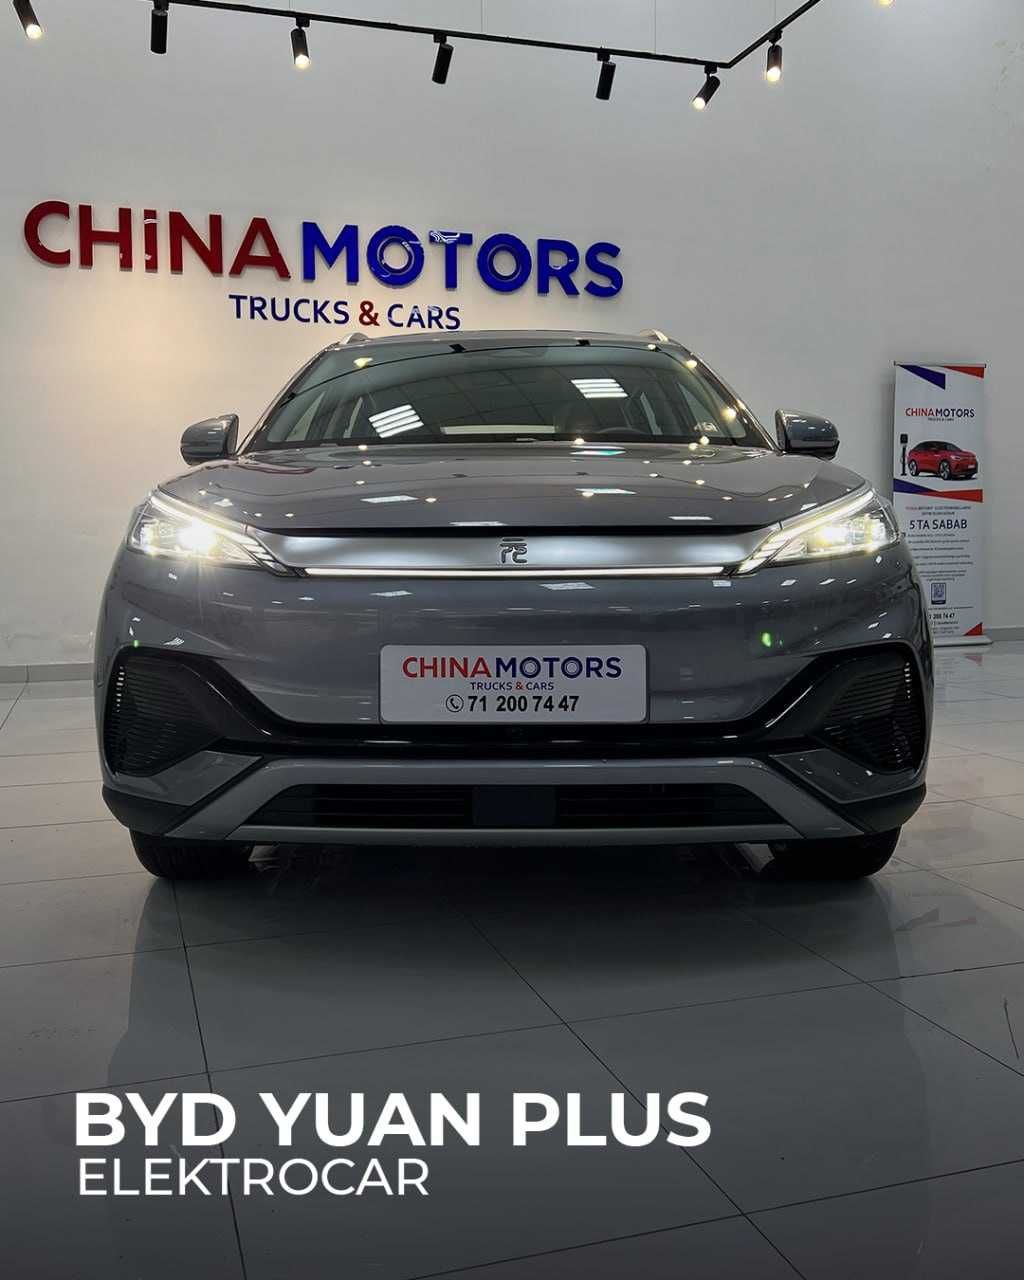 BYD Yuan plus edition